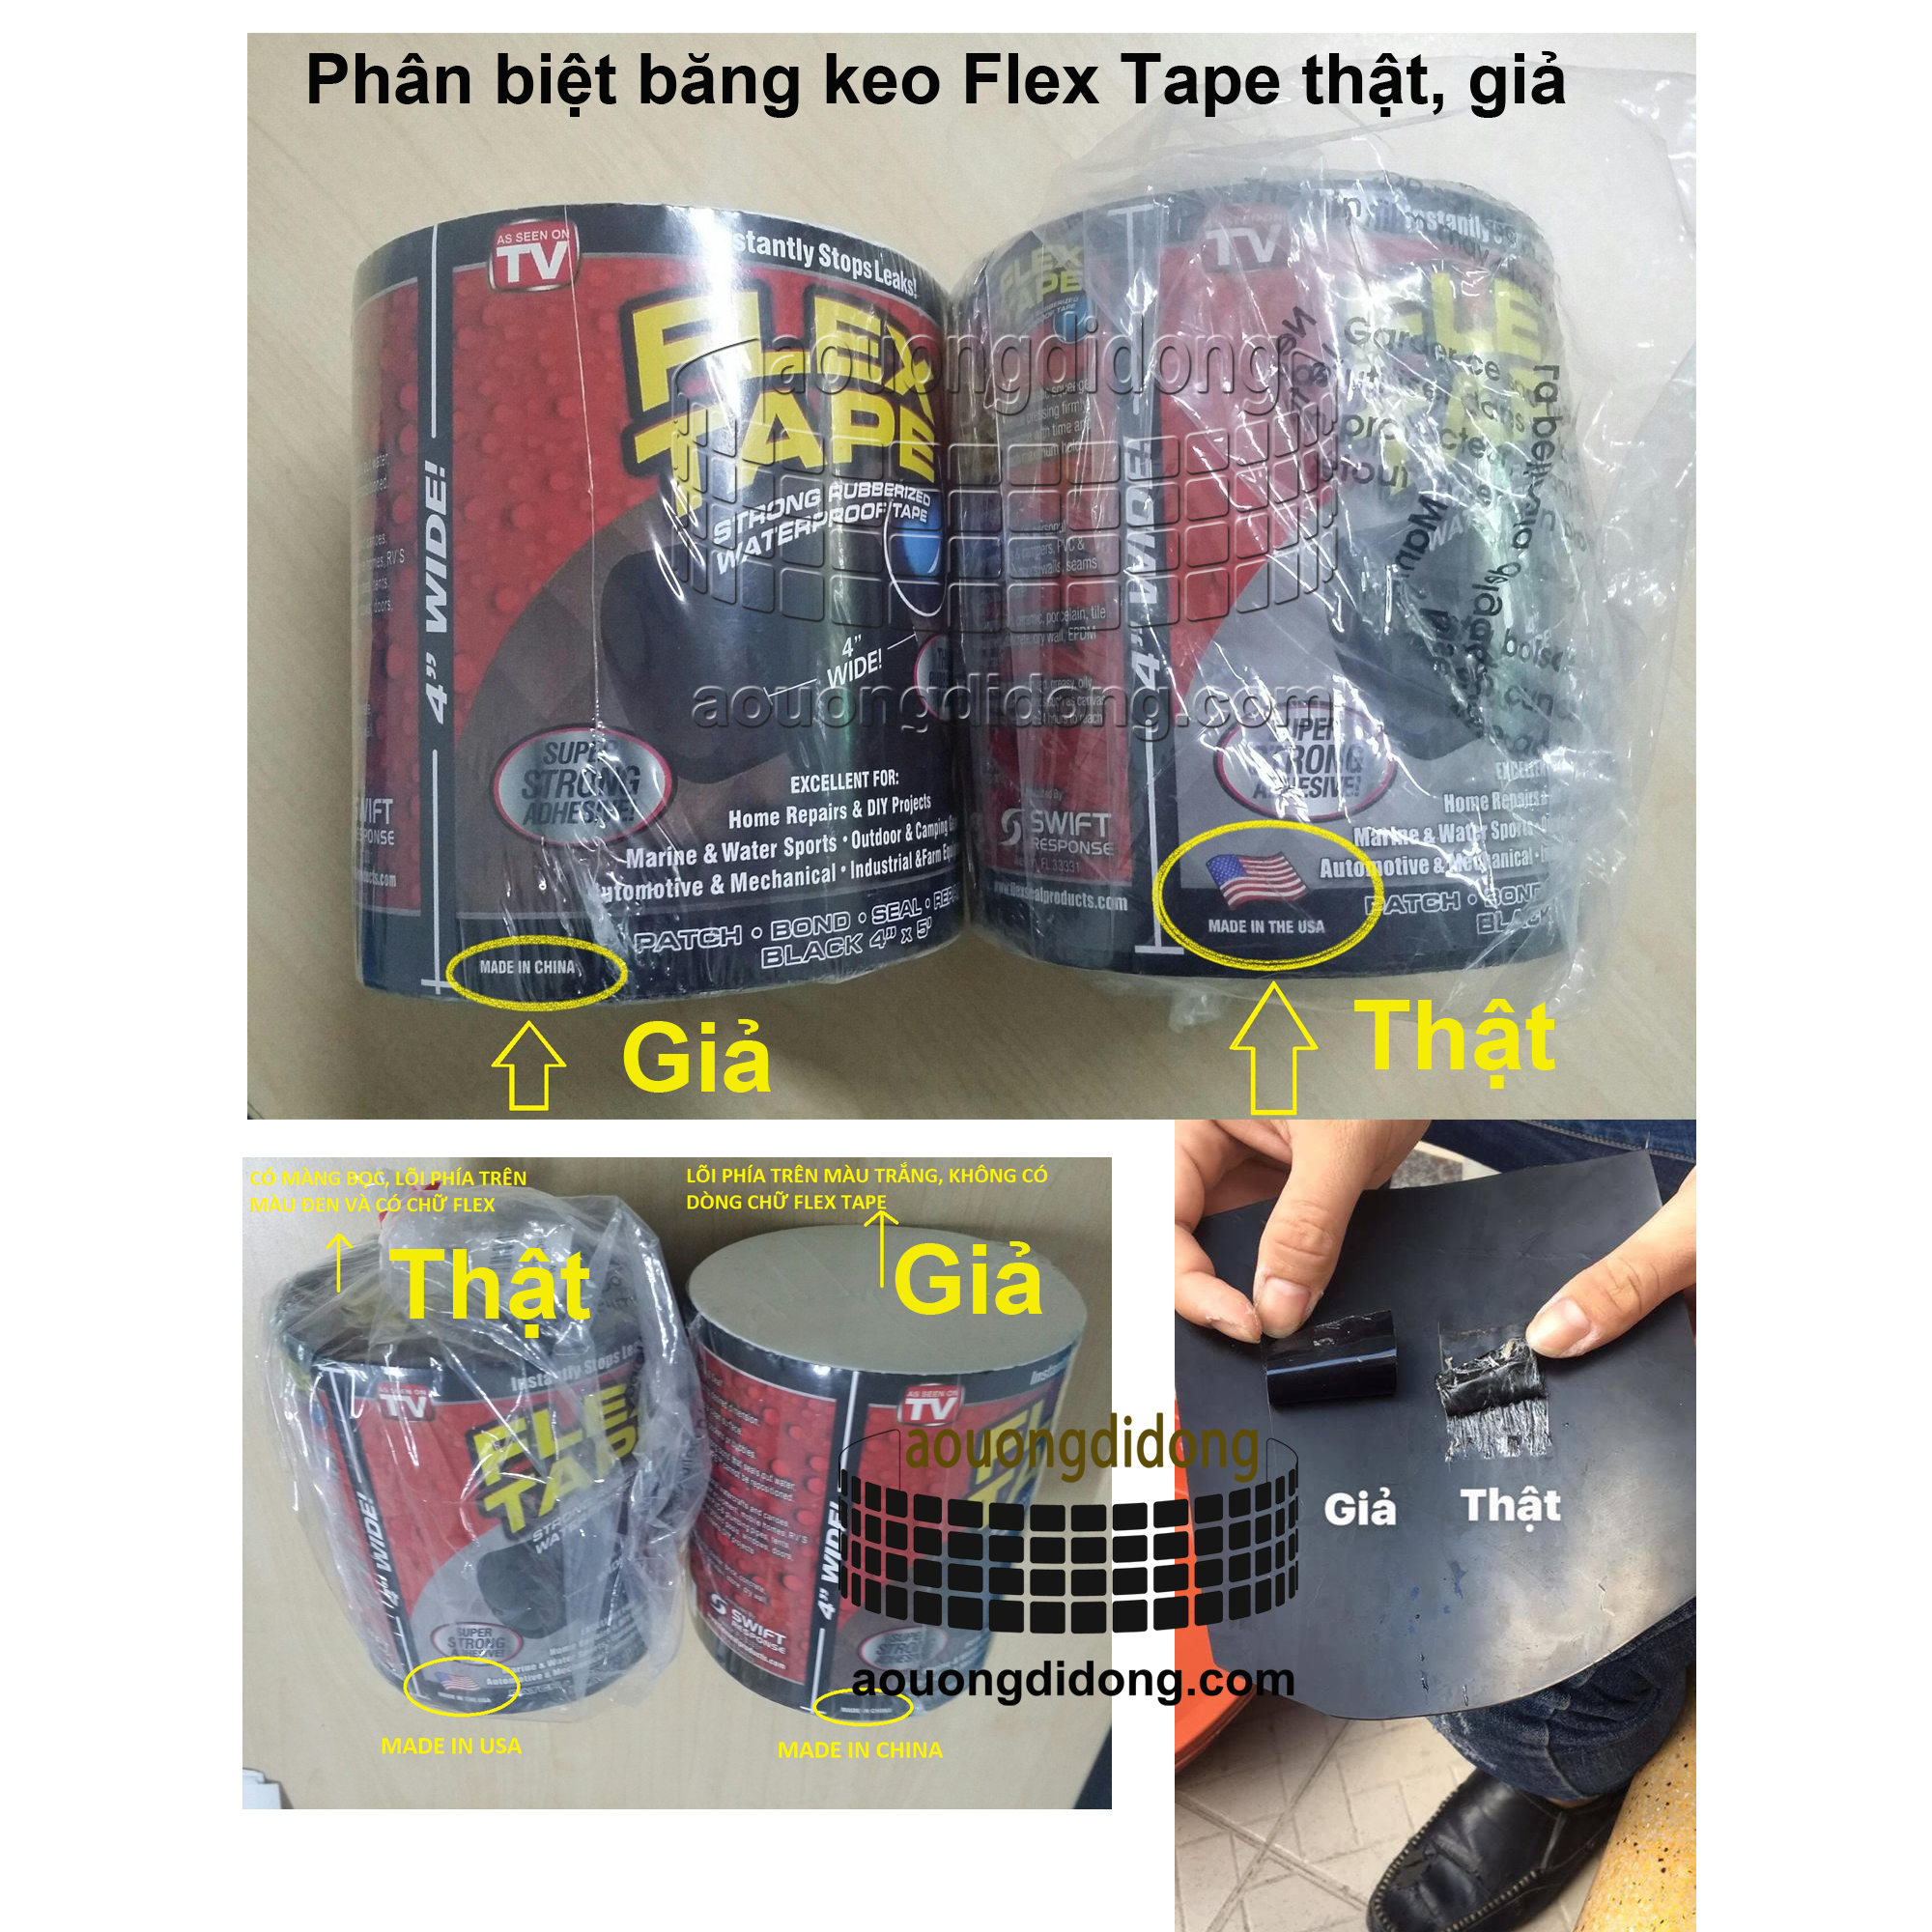 phan biet that gia bang keo flex tape.jpg (1.76 MB)